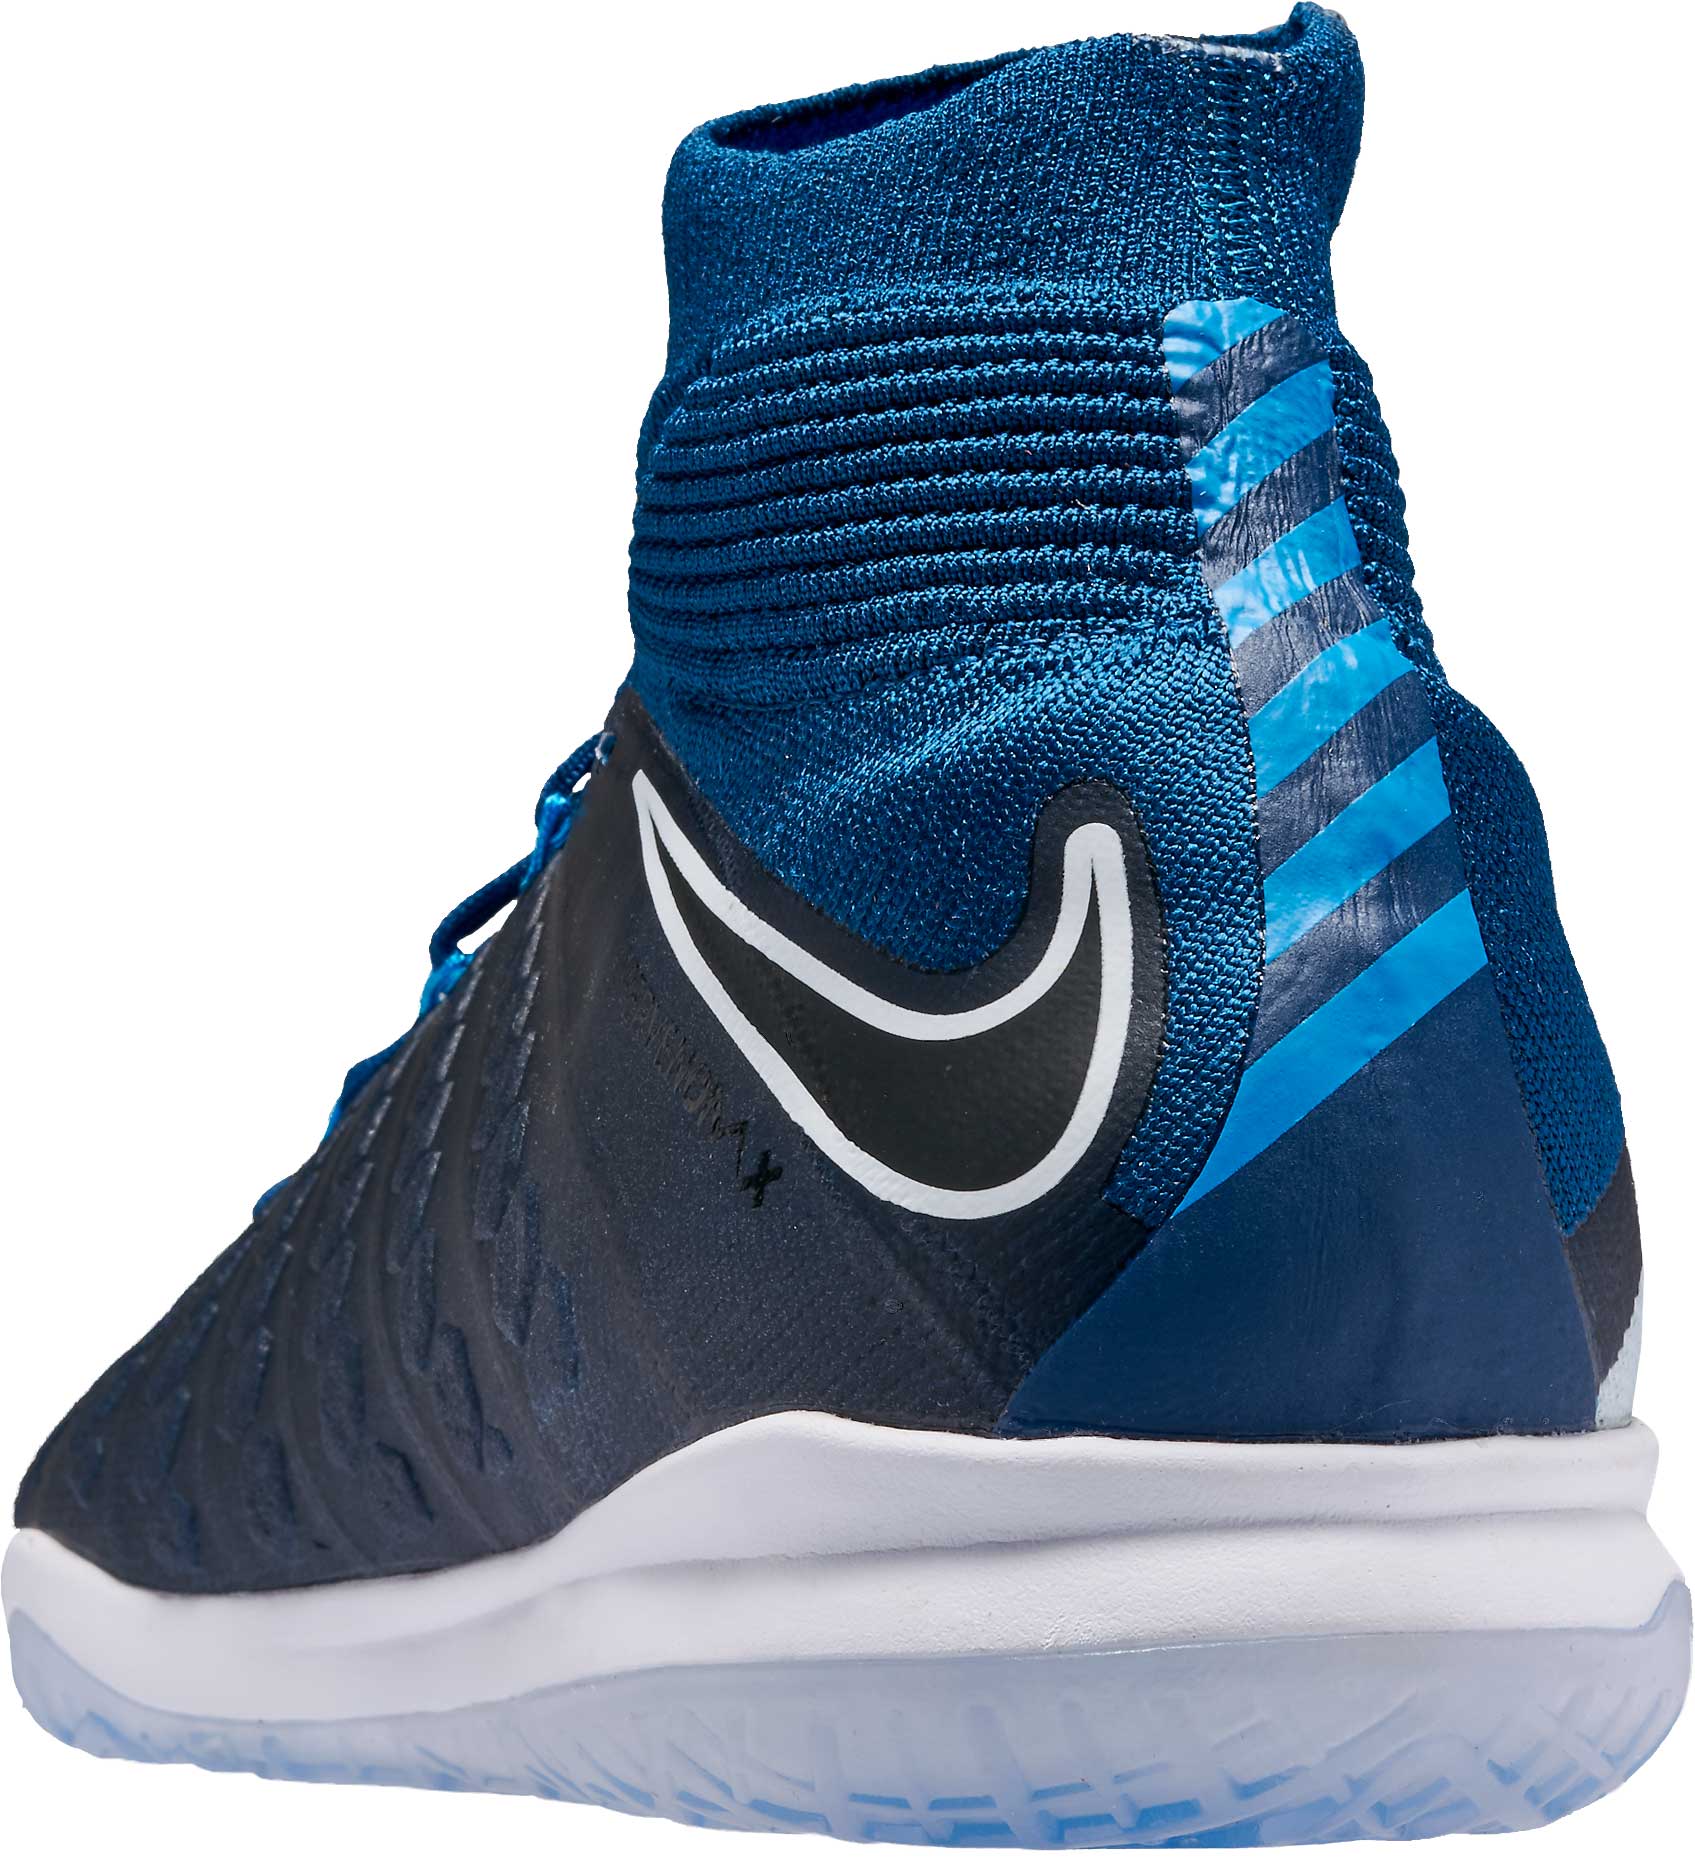 Nike HypervenomX Proximo II DF IC Shoes - Brave Blue & Black - Soccer